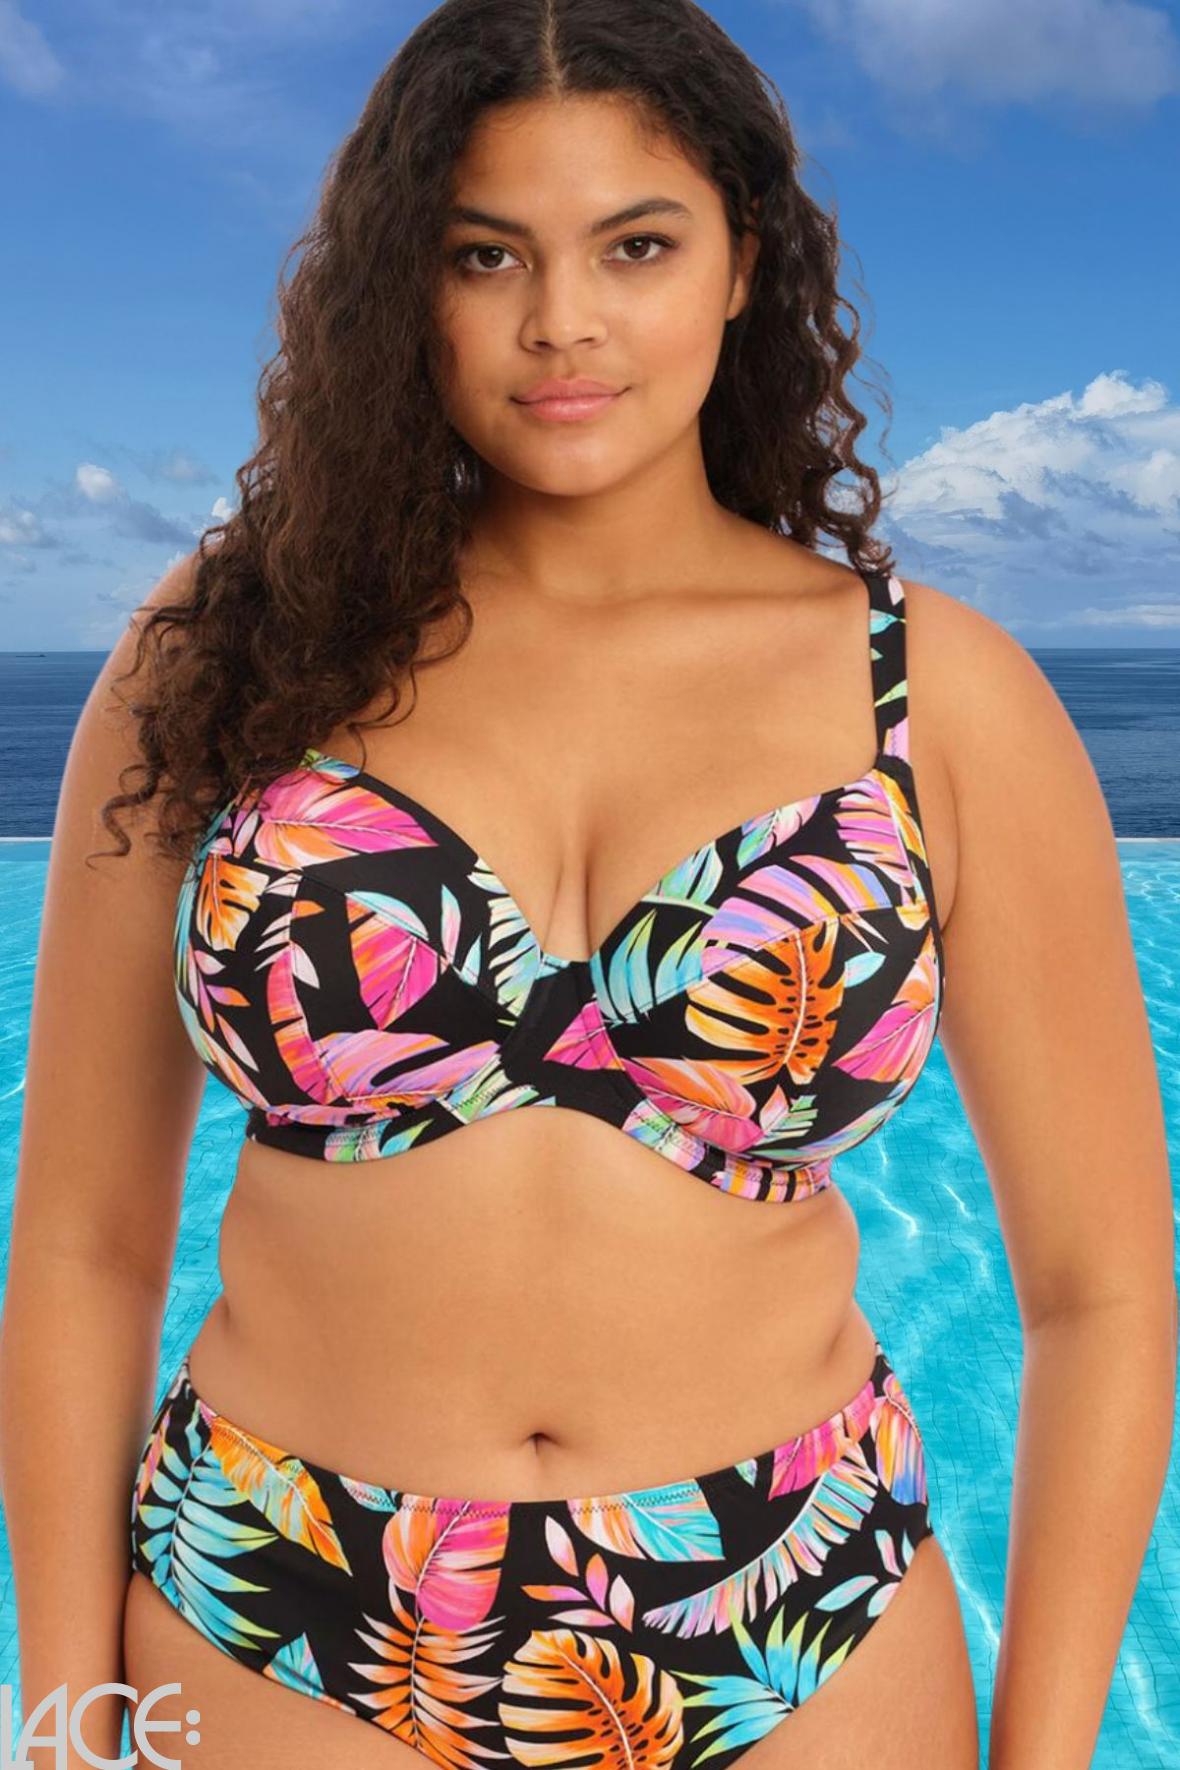 Elomi Party Bay Underwired Plunge Bikini Top Adjustable Lined Swim Swimwear